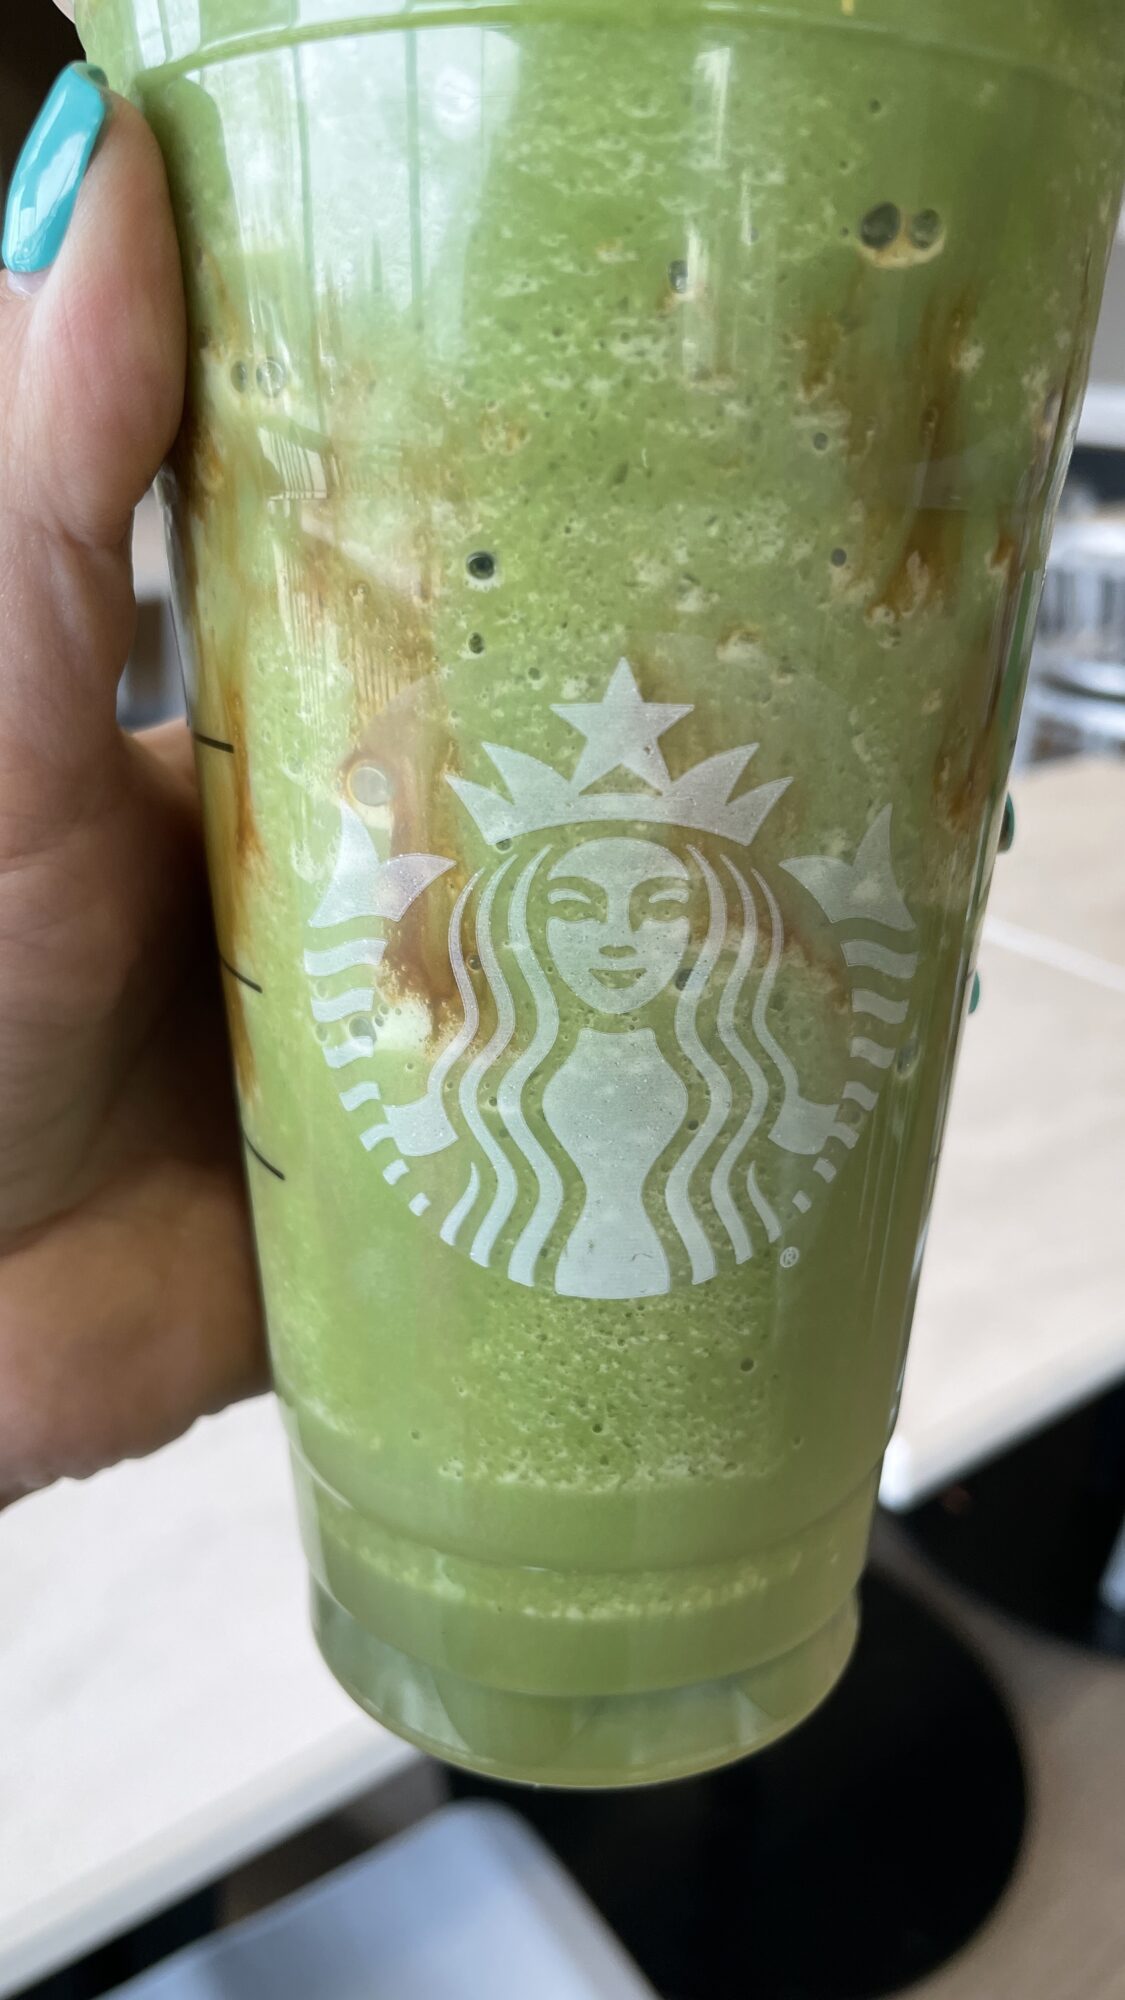 Starbucks promises “new world of matcha” with green tea cheese Frappuccino,  citrus green tea